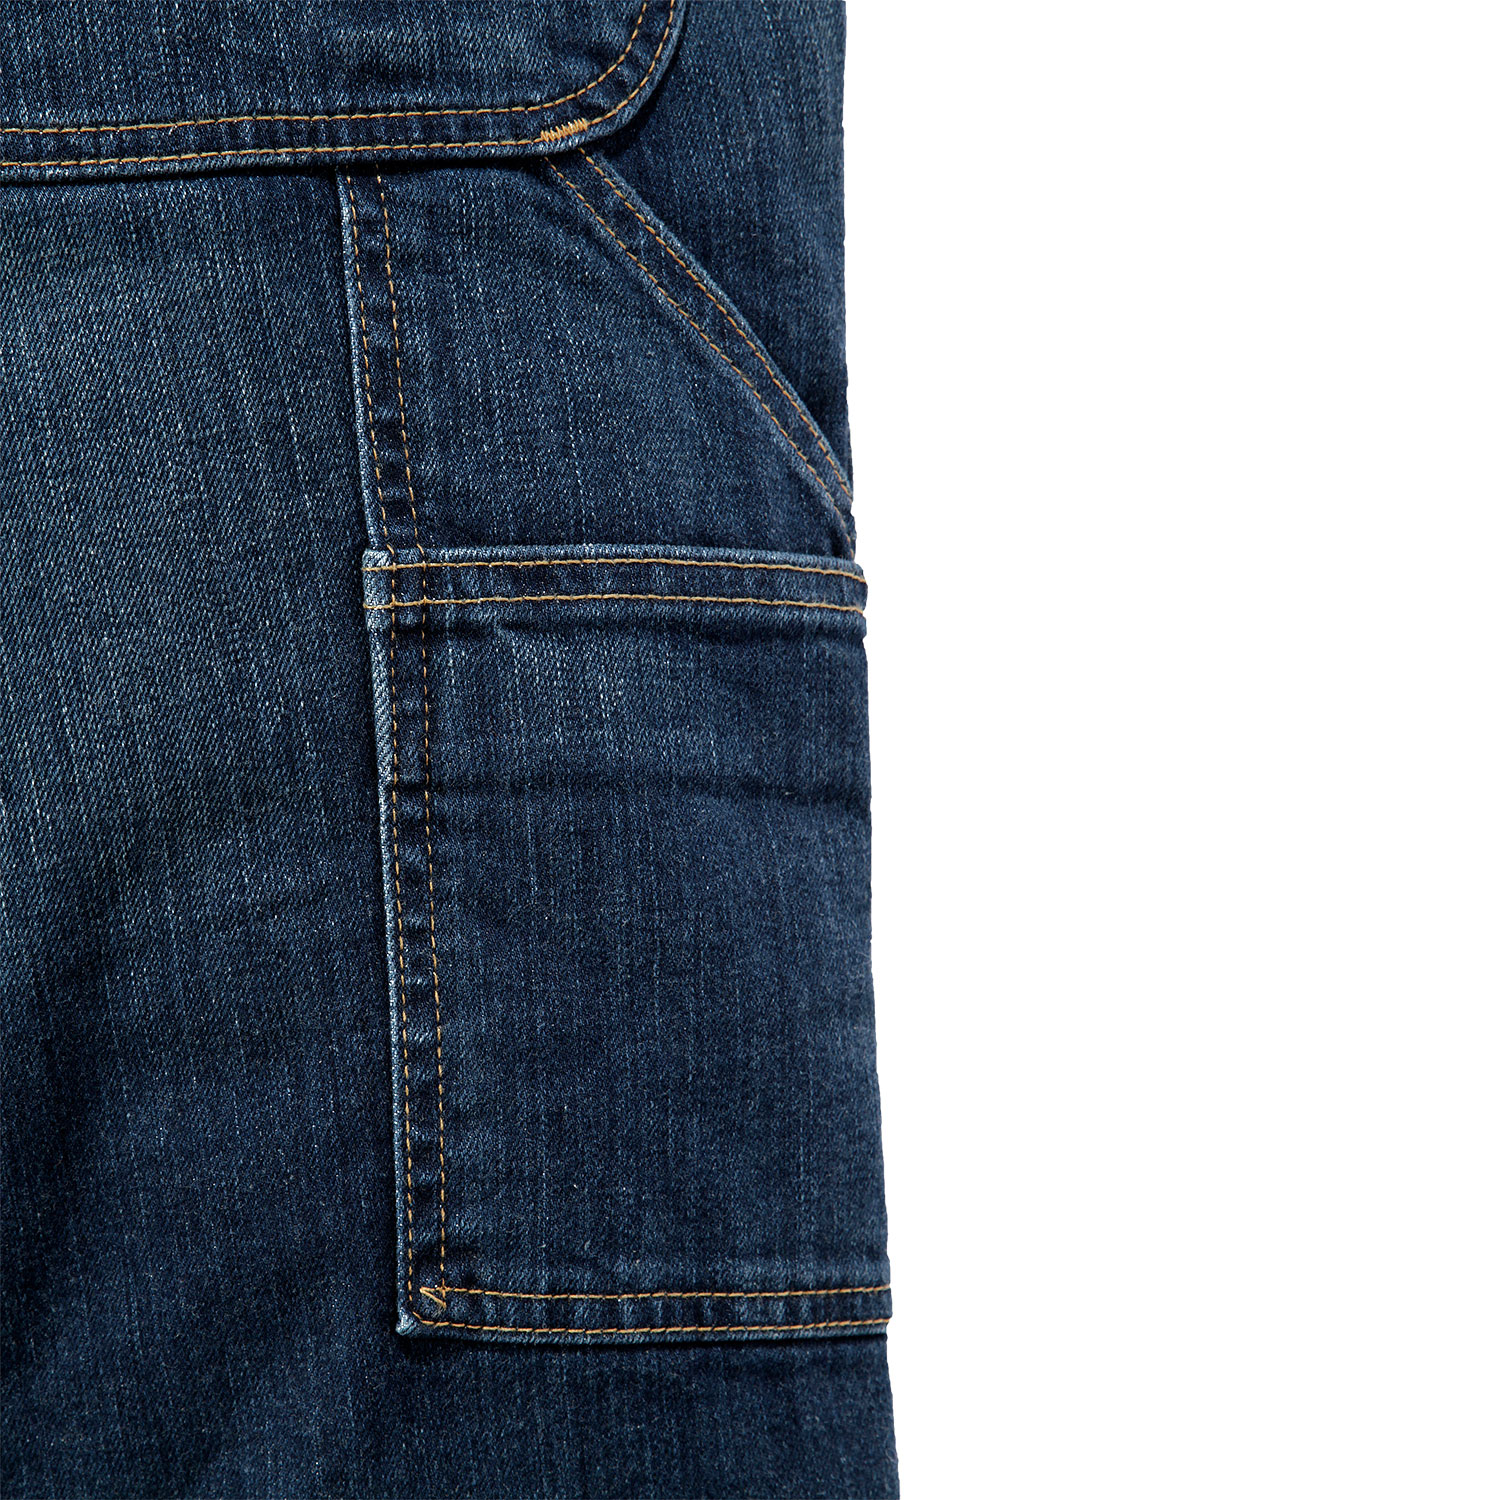 Carhartt Rugged Flex Dungaree Jeans - 8